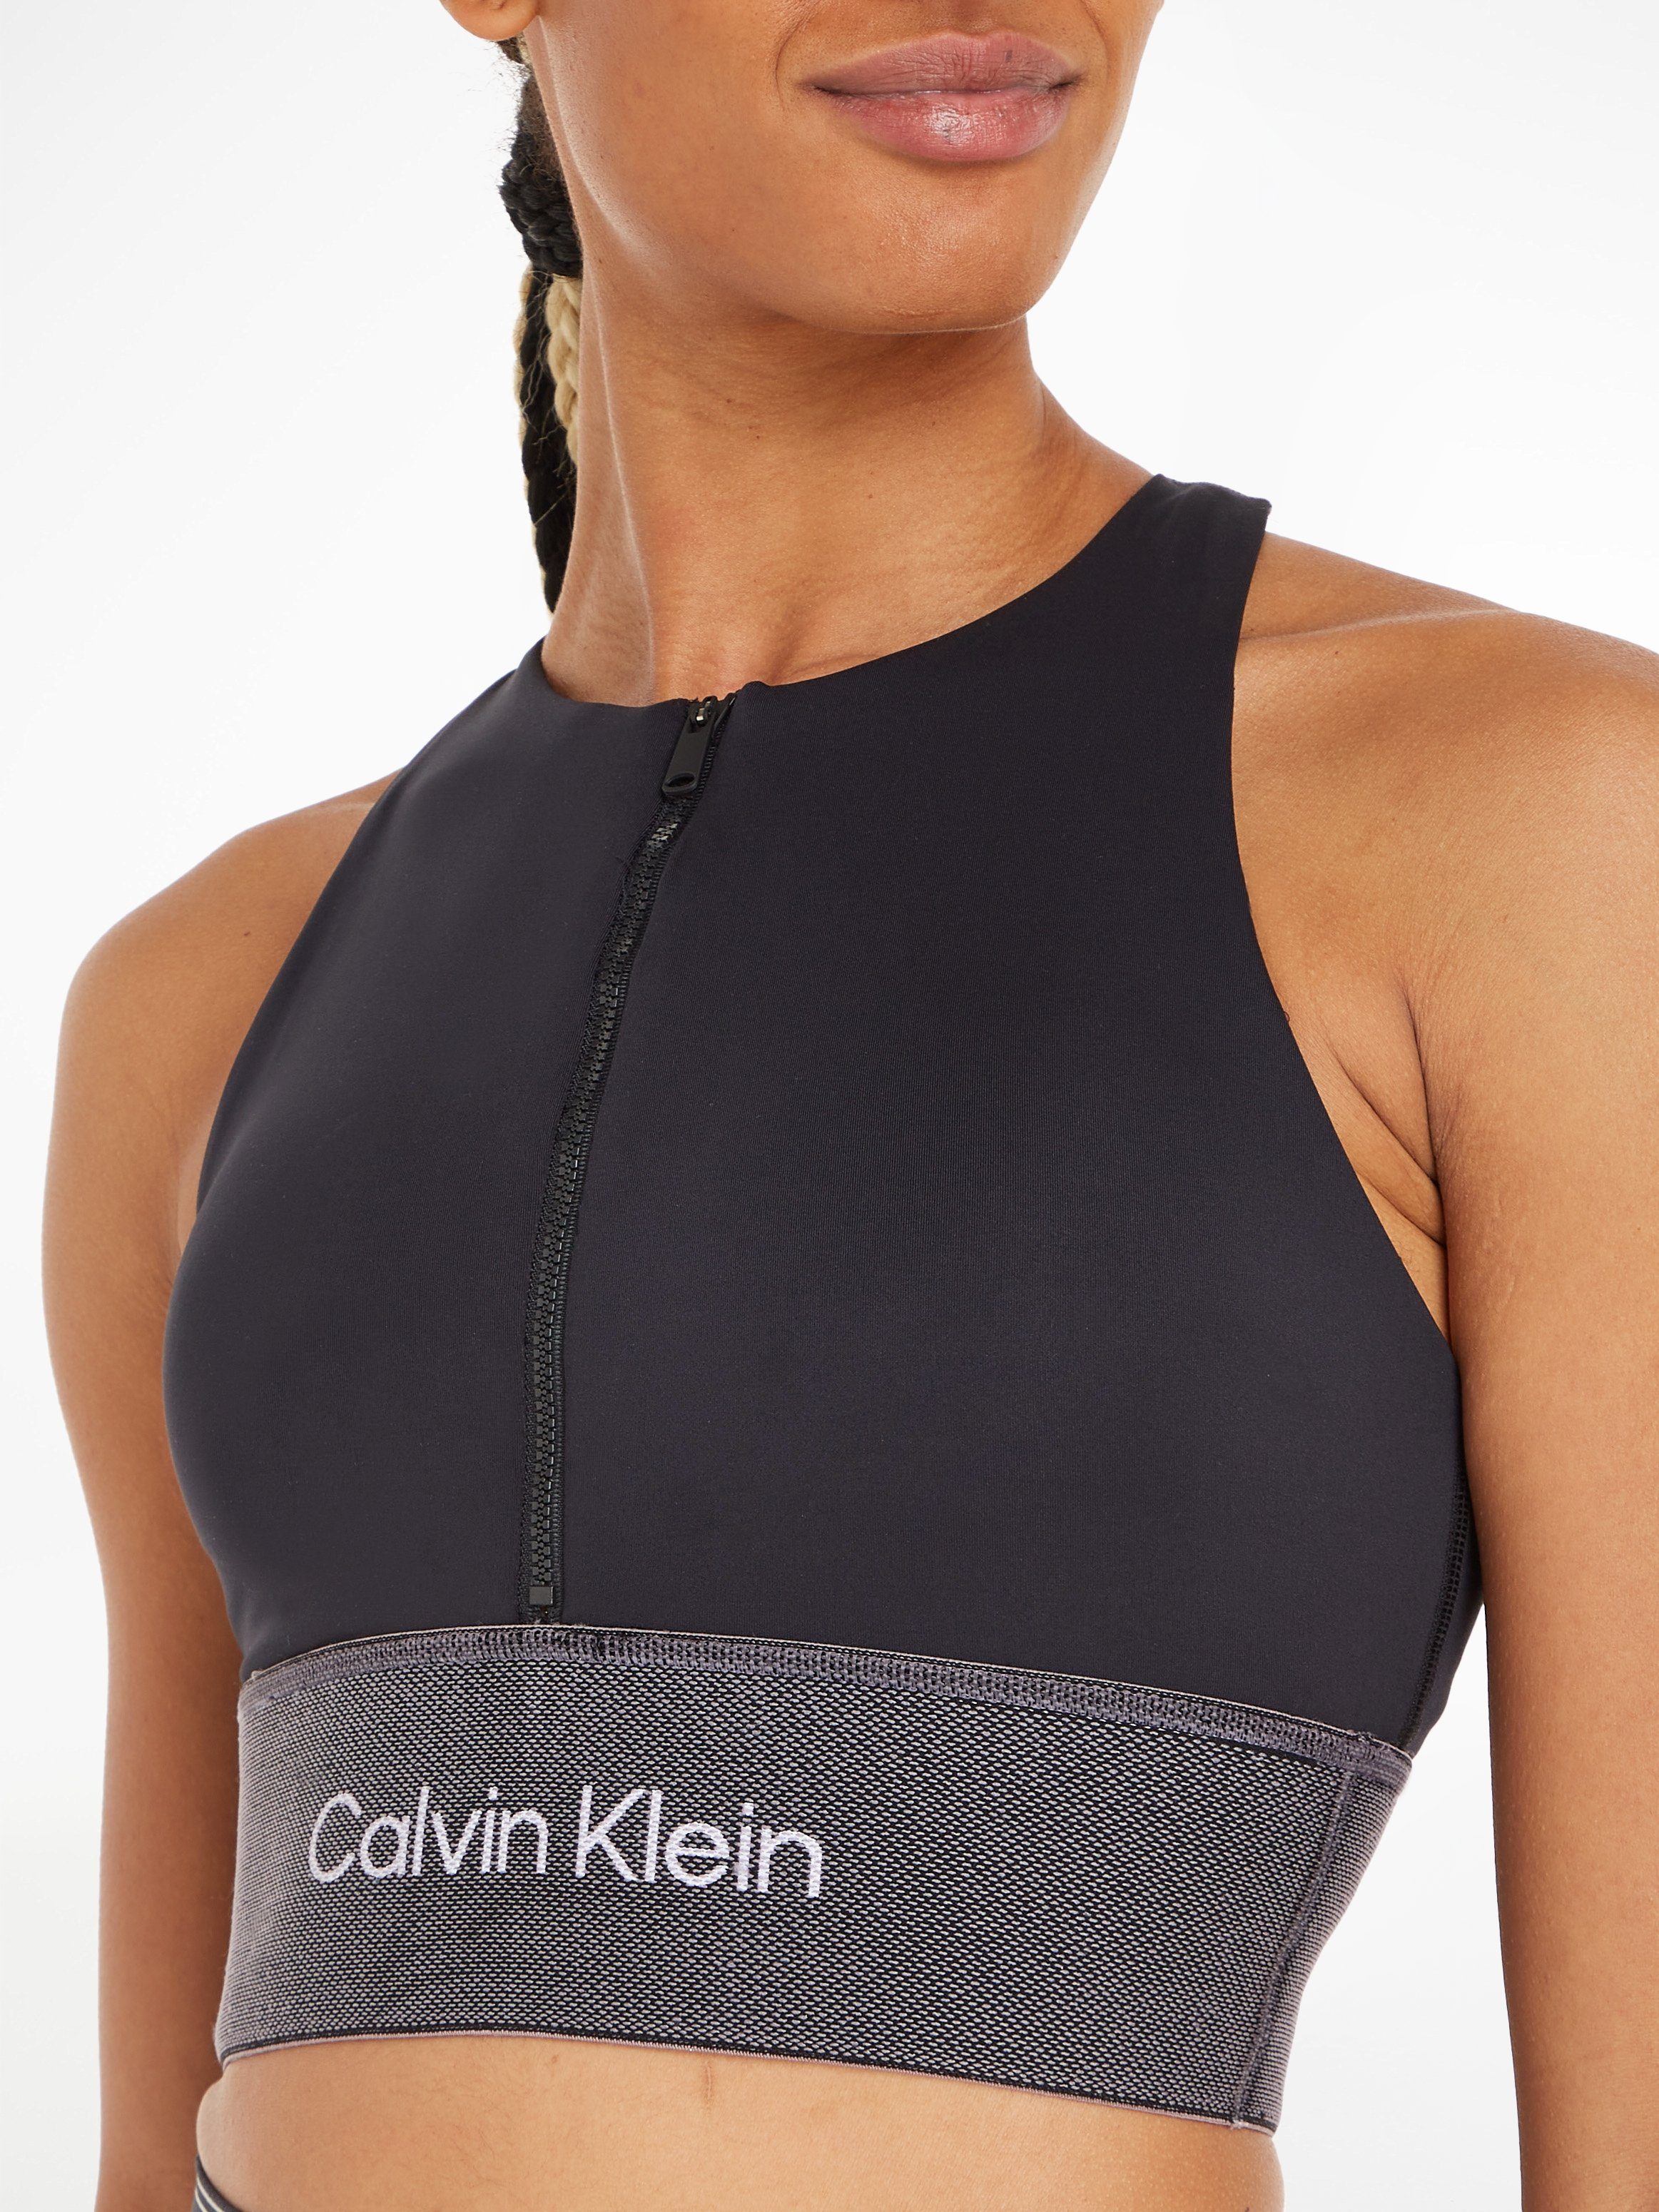 Calvin Klein Sport Sport-Bustier WO - Black Beauty Support Sports Bra Medium